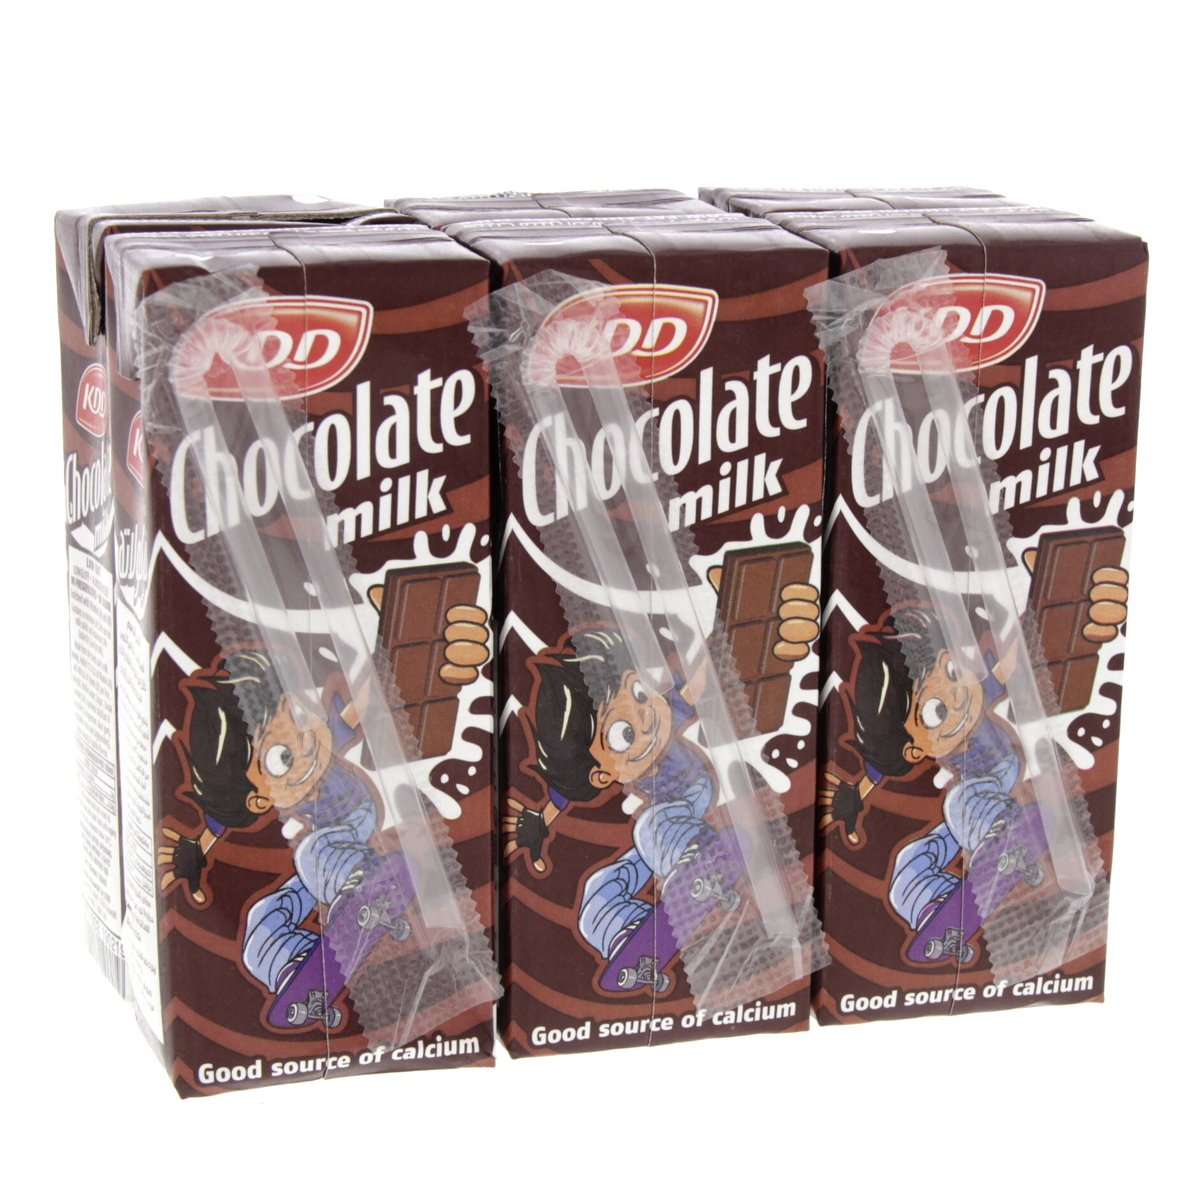 KDD Chocolate Milk 6 x 180 ml